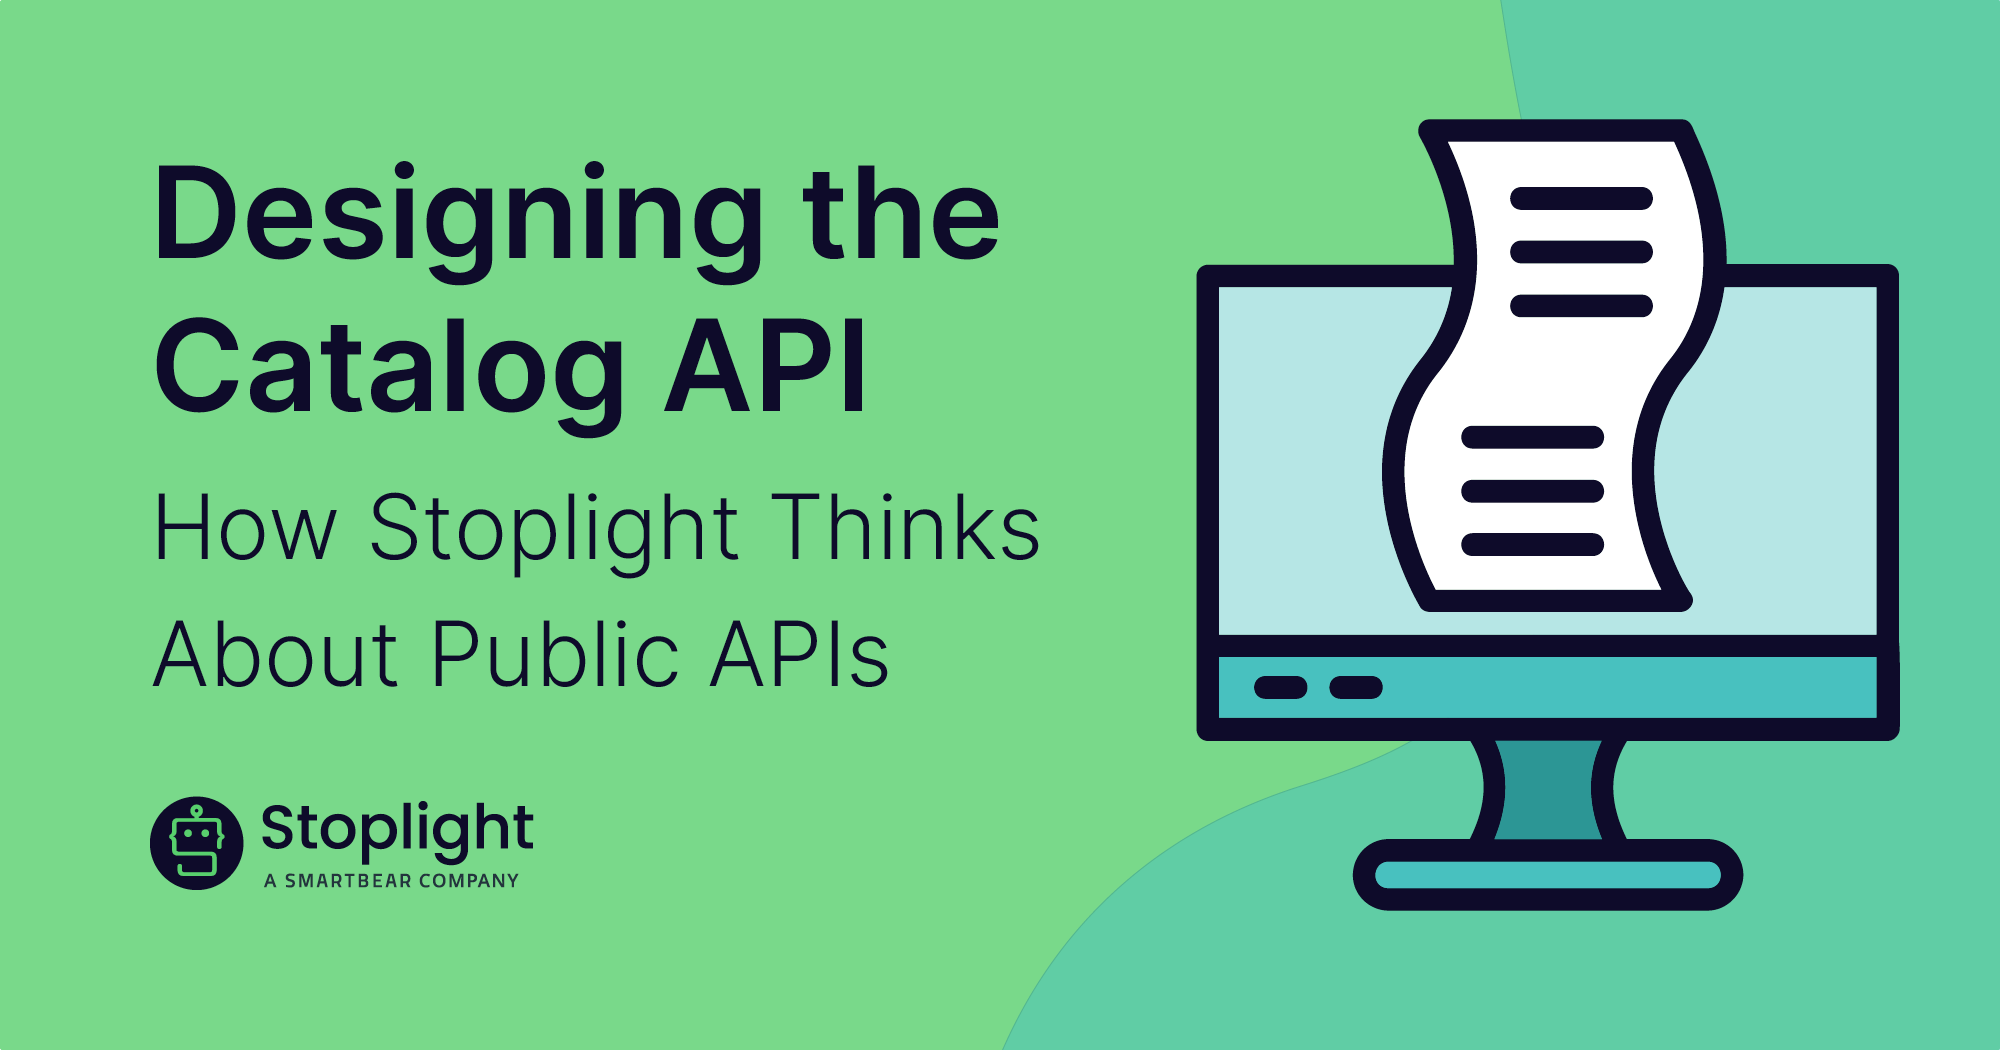 Designing the Catalog API: How Stoplight Thinks About Public APIs